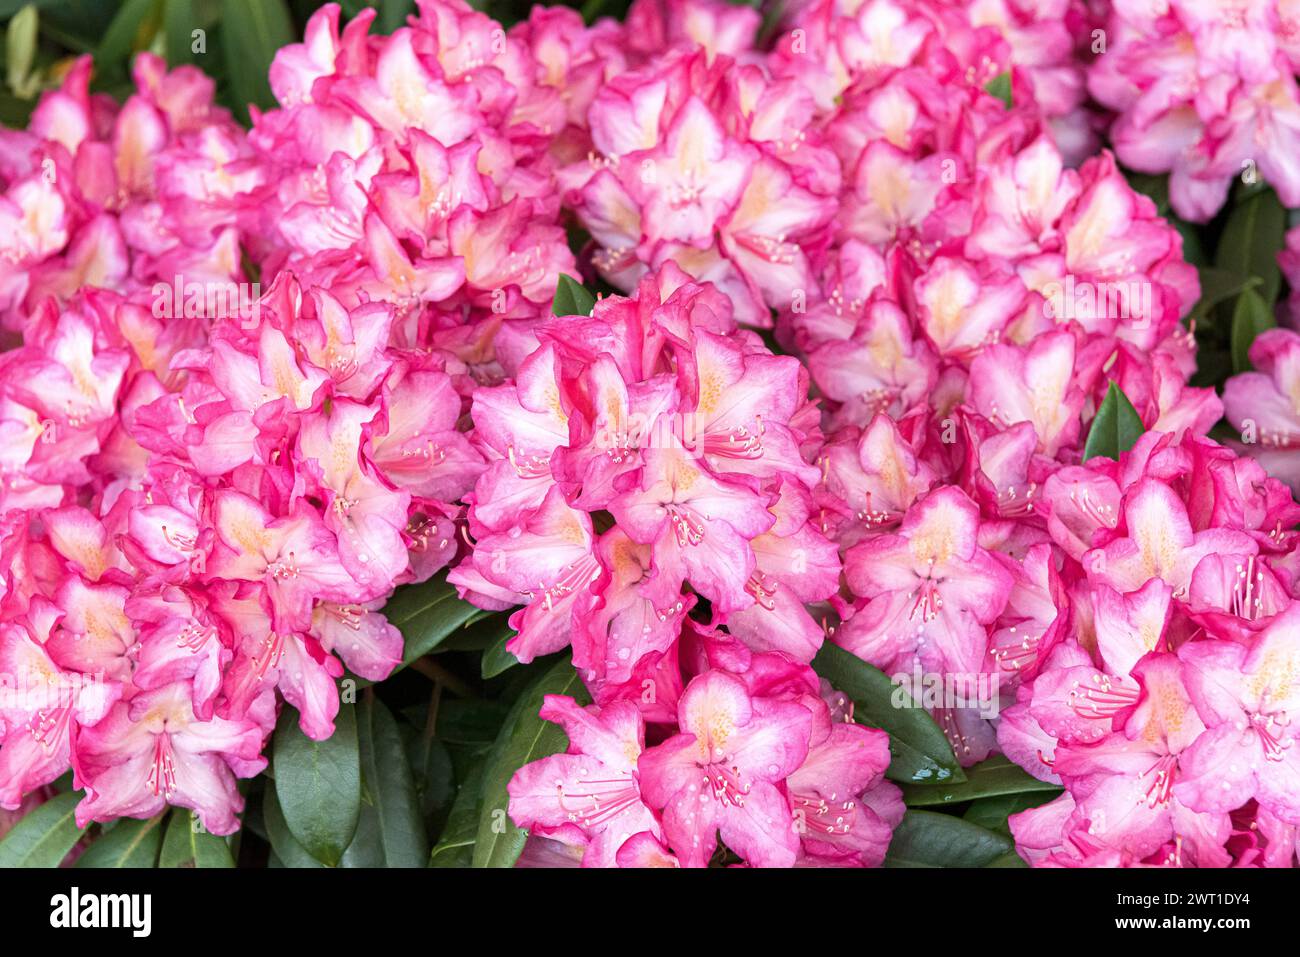 rhododendron (Rhododendron 'Cuyabeno', Rhododendron Cuyabeno), fioritura, cultivar Cuyabeno Foto Stock